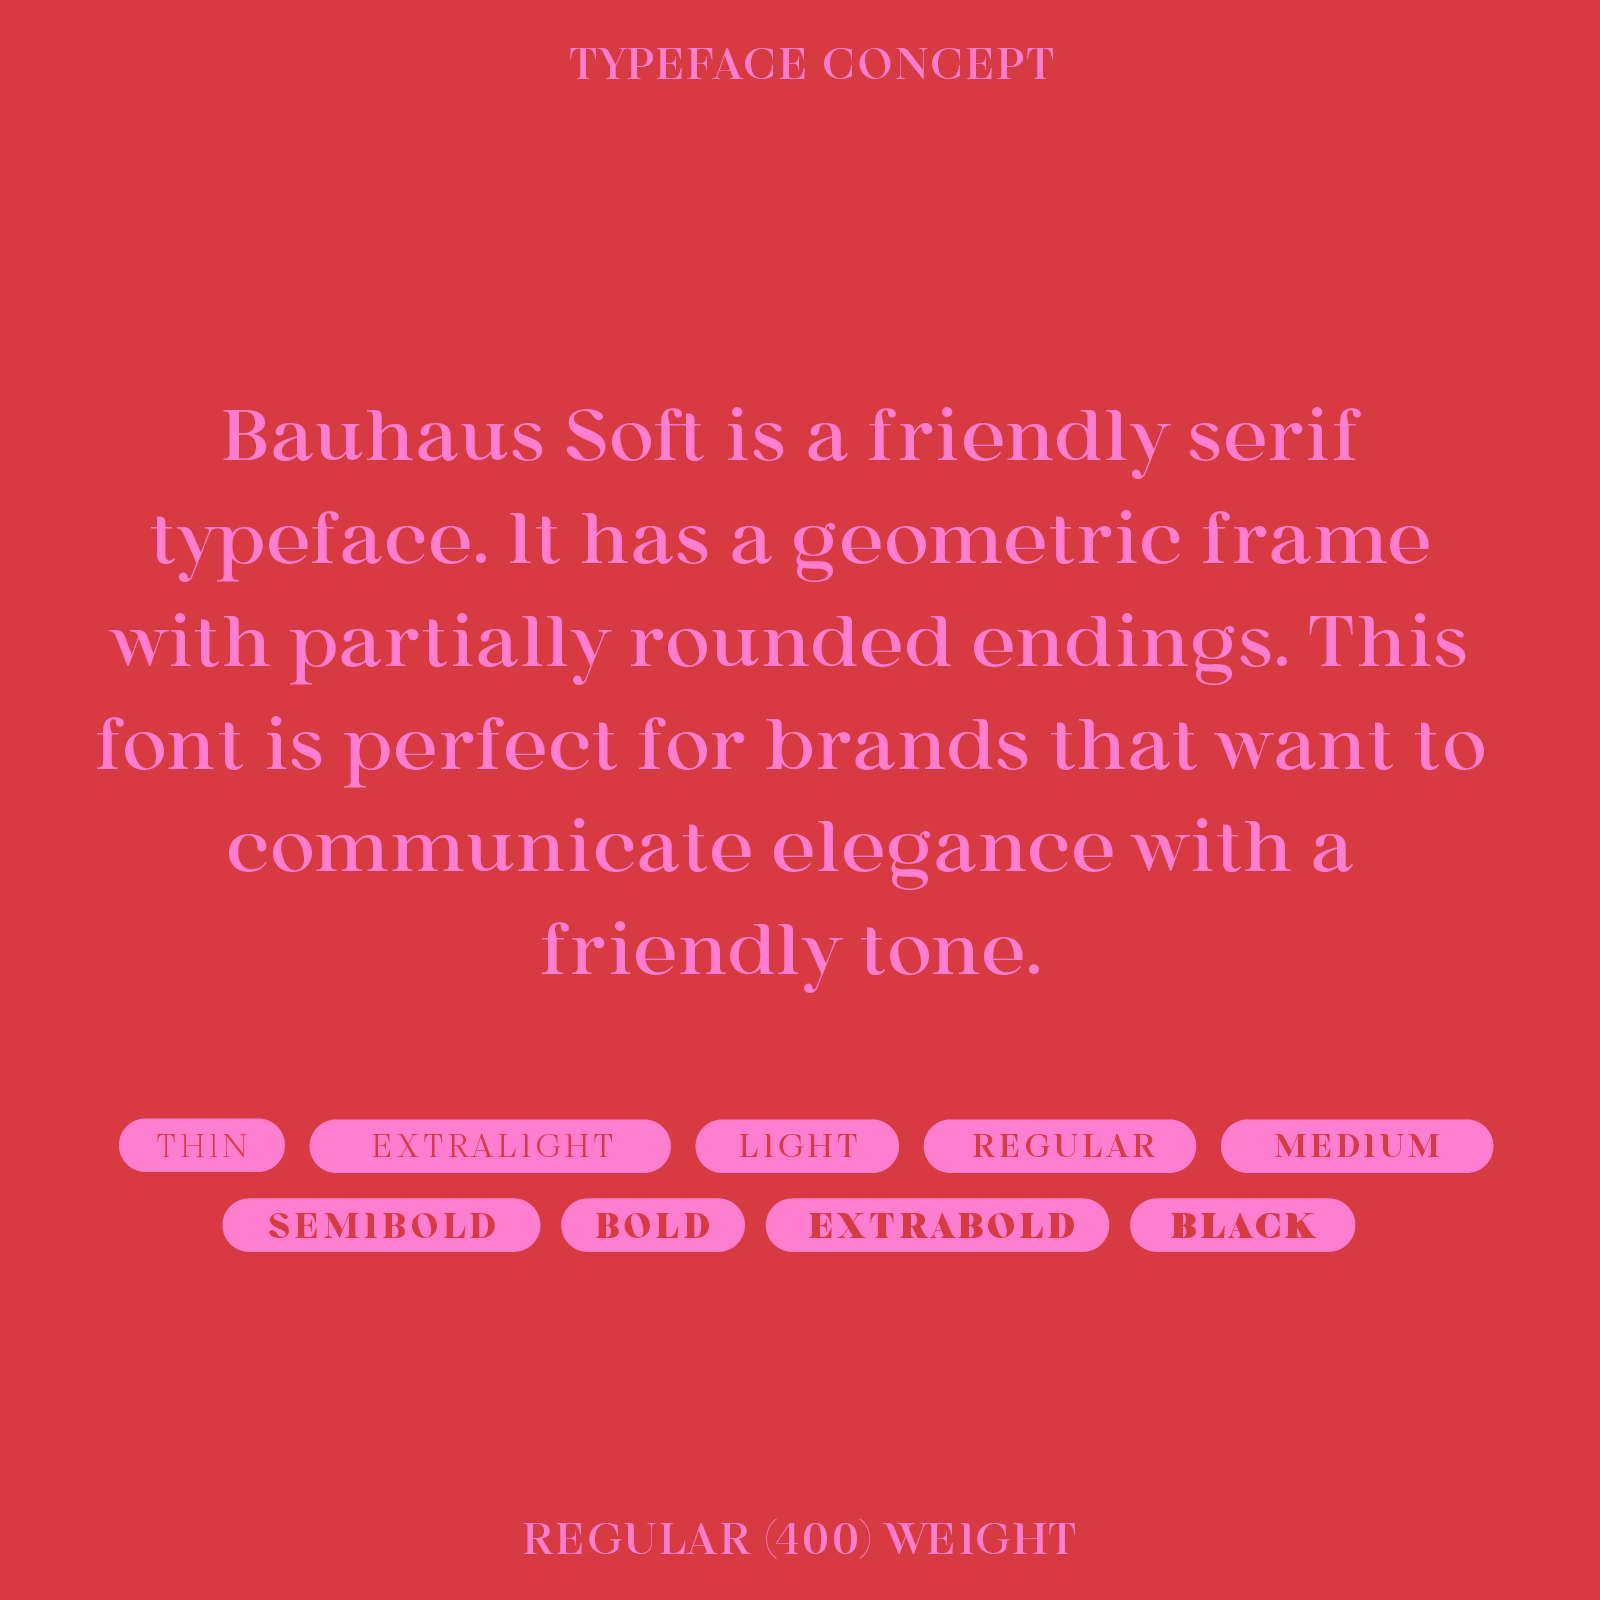 Bauhaus Soft—Organic serif font